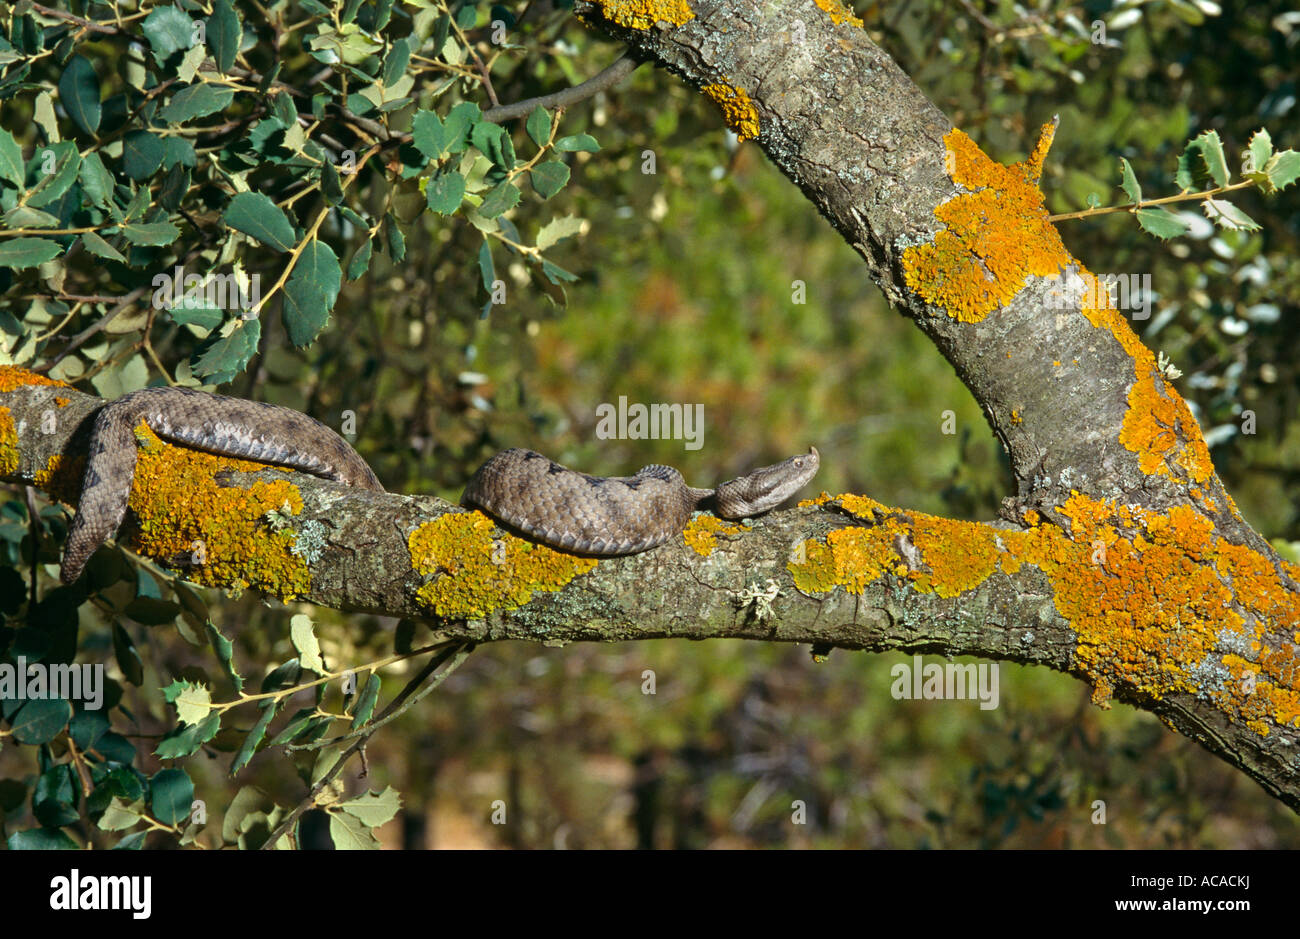 Lataste s viper Vipera latasti in arboreal habitat Font Roja NP Alicante Spain Stock Photo